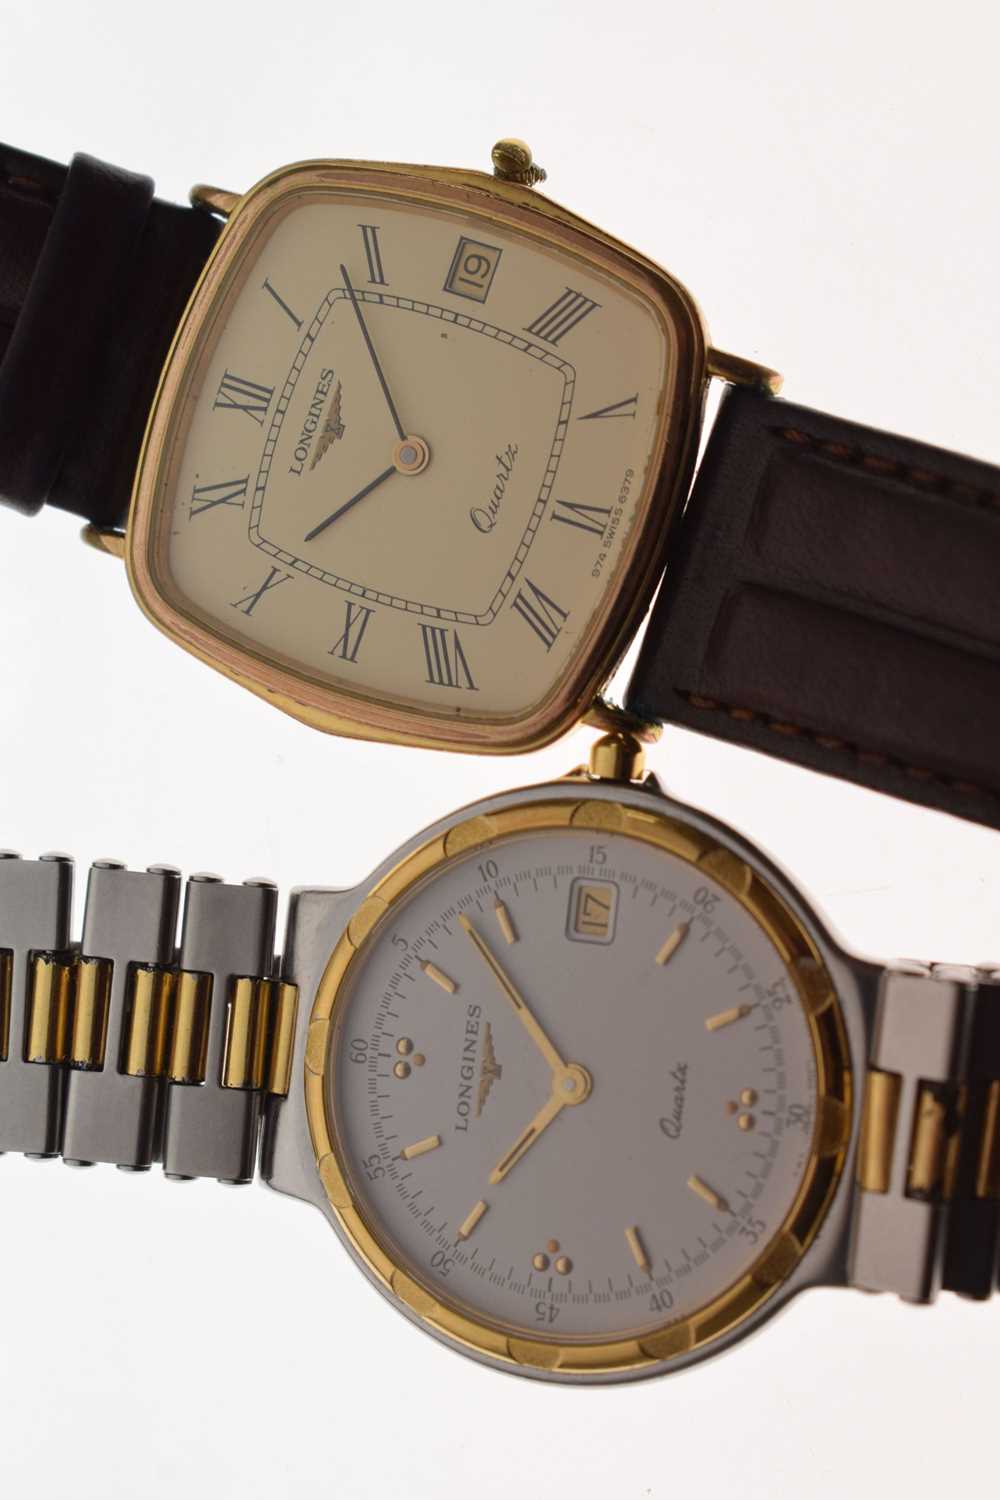 Longines - Two gentleman's quartz watches - Image 3 of 8